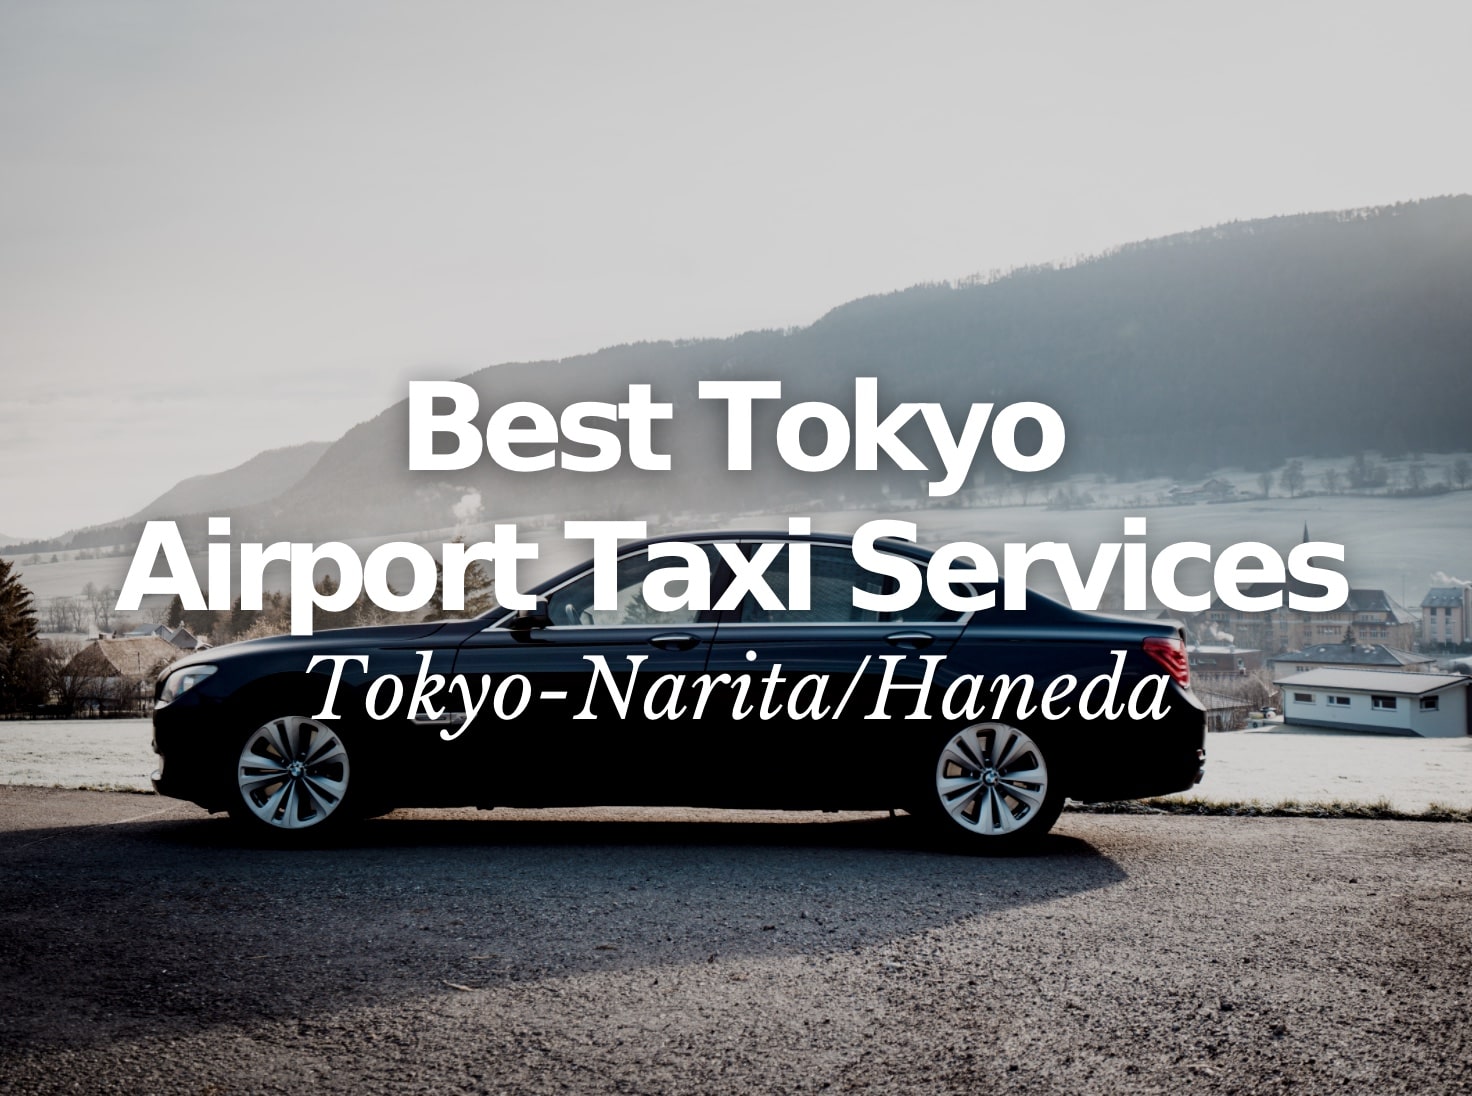 7 Best Airport Taxi Services between Tokyo and Narita/Haneda